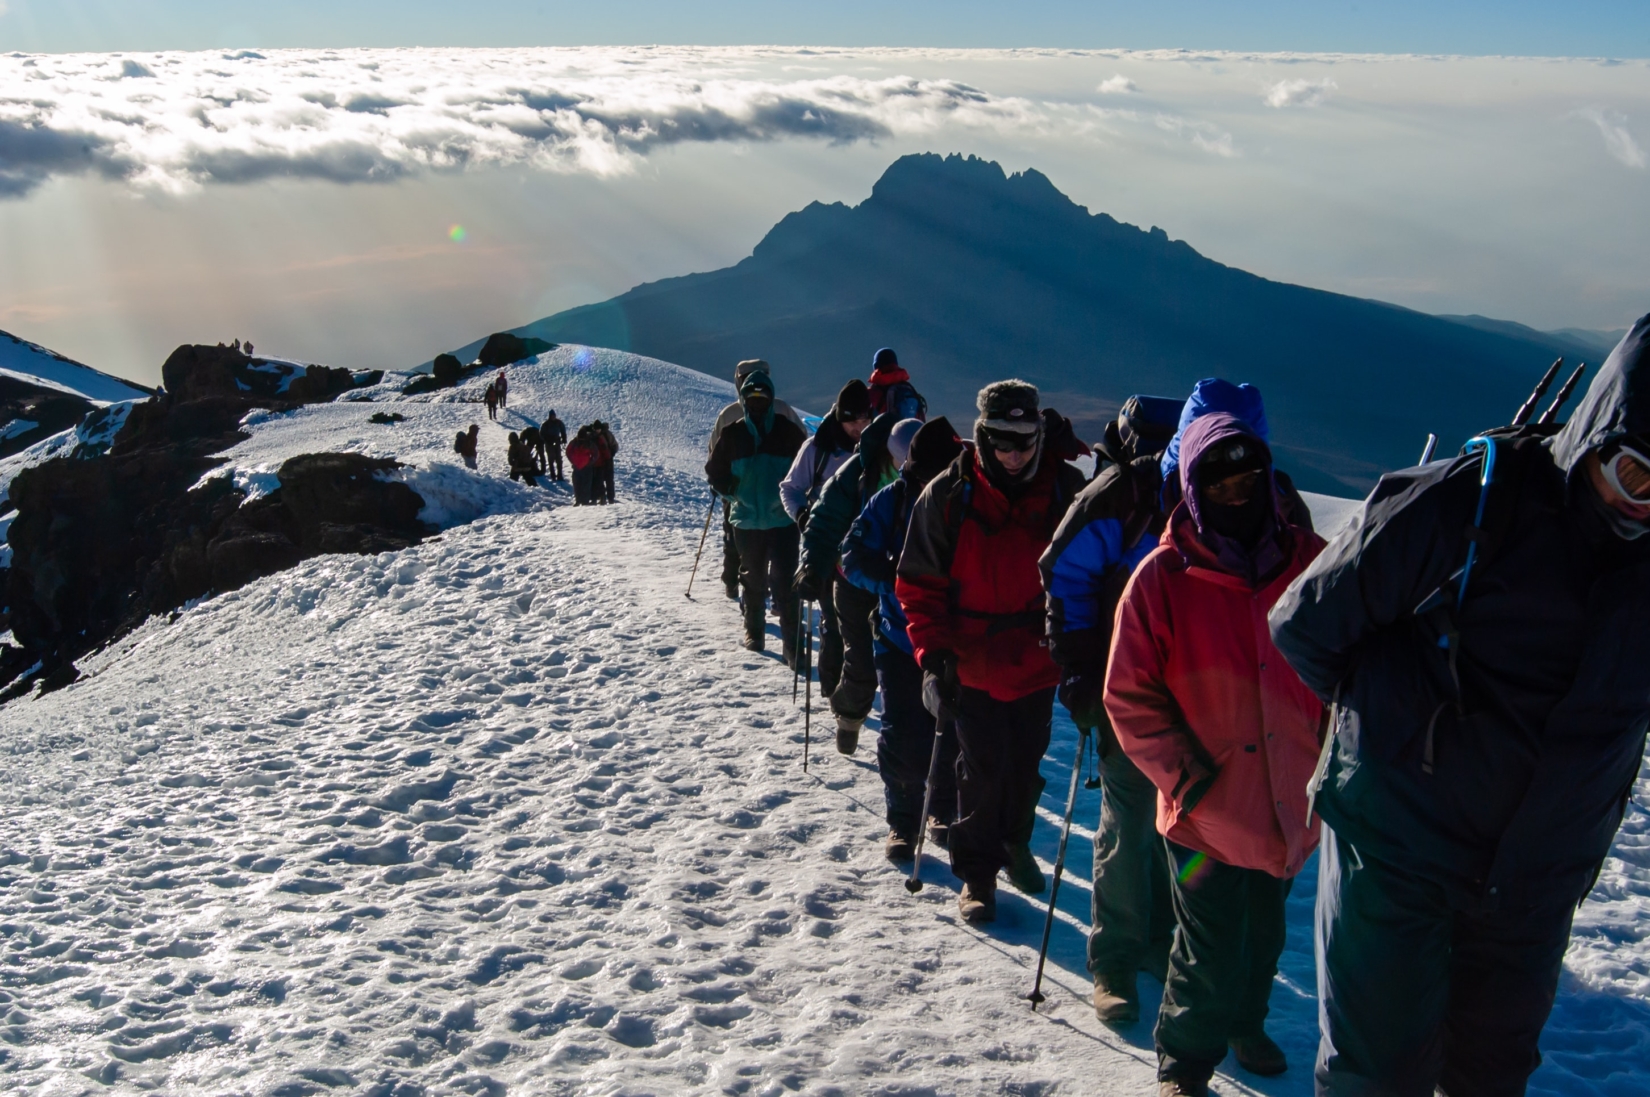 Climbing Mount Kilimanjaro - Benefits And Challenges